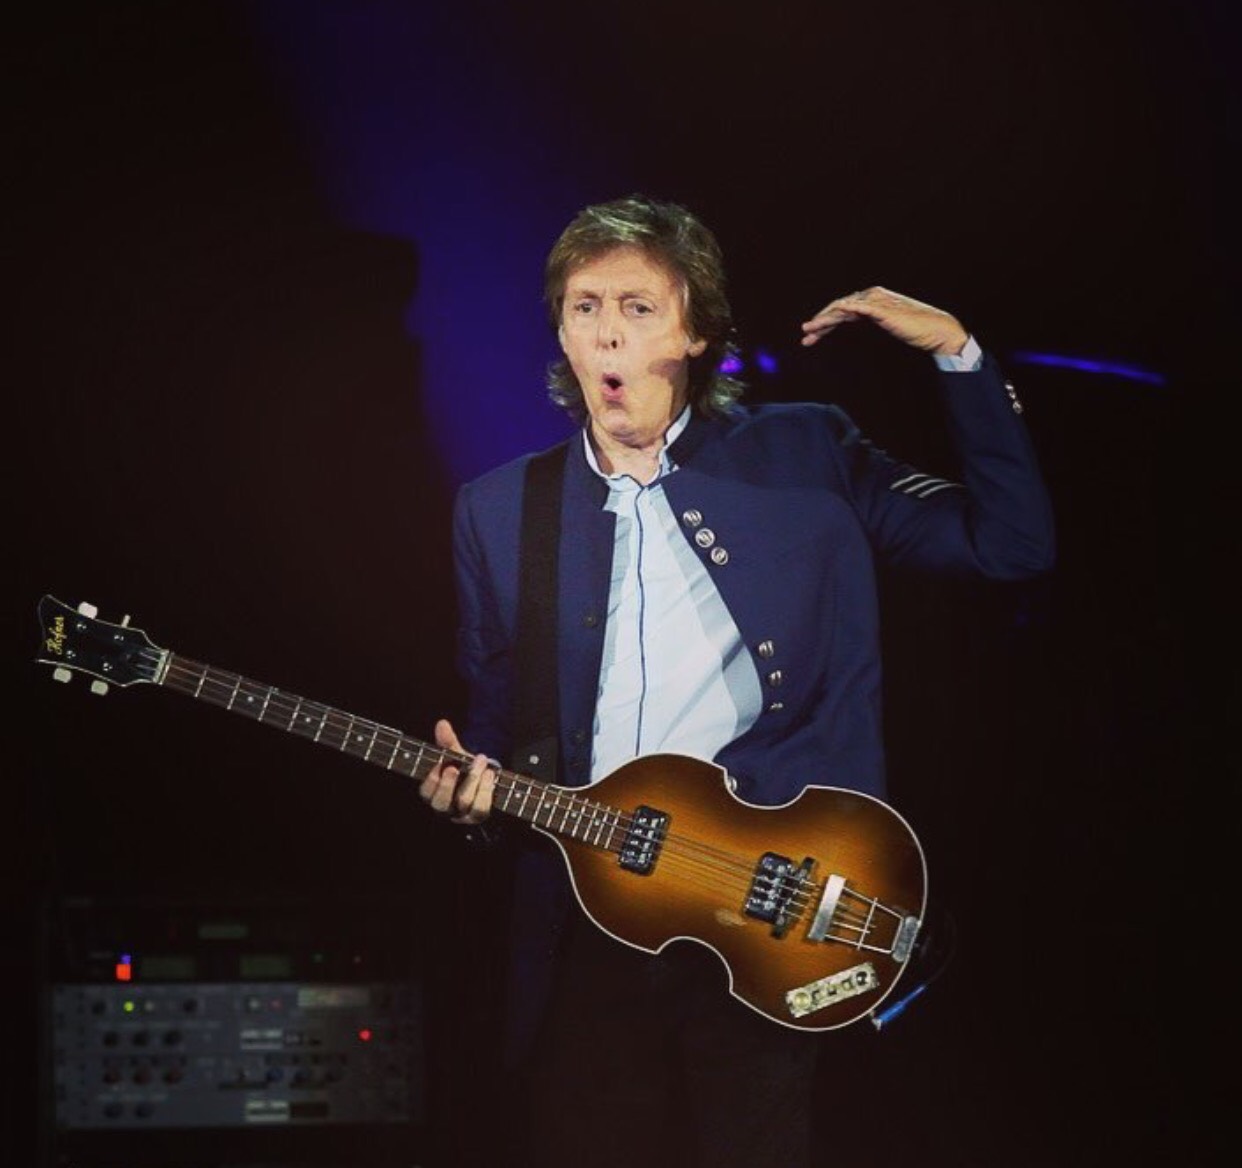 Paul McCartney durante show na Fonte Nova: “E aí, Salvador? Beleza?”